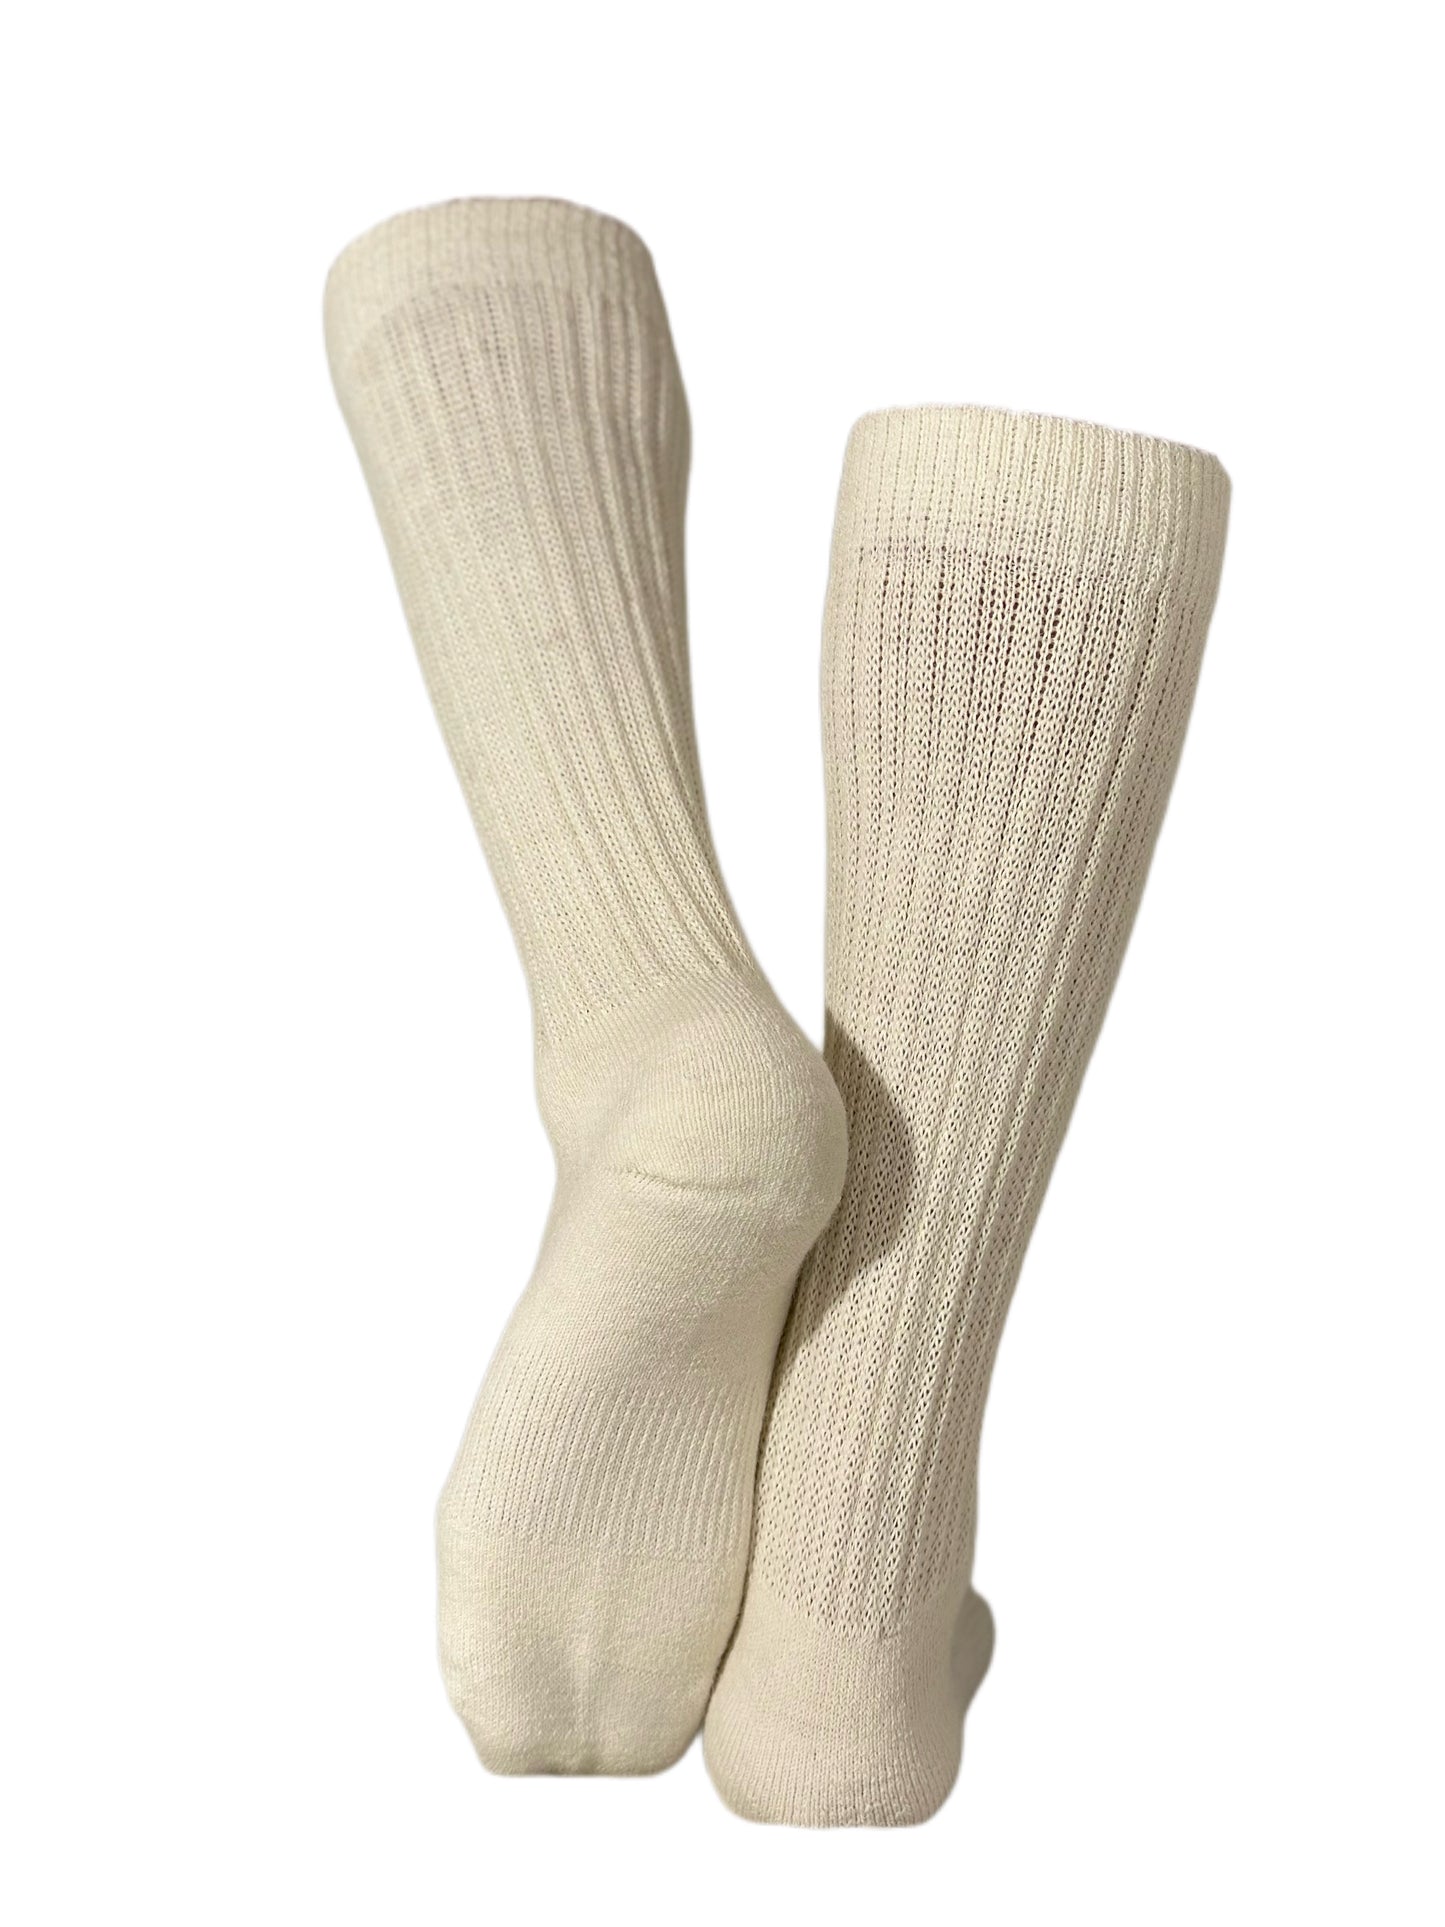 The knee sock